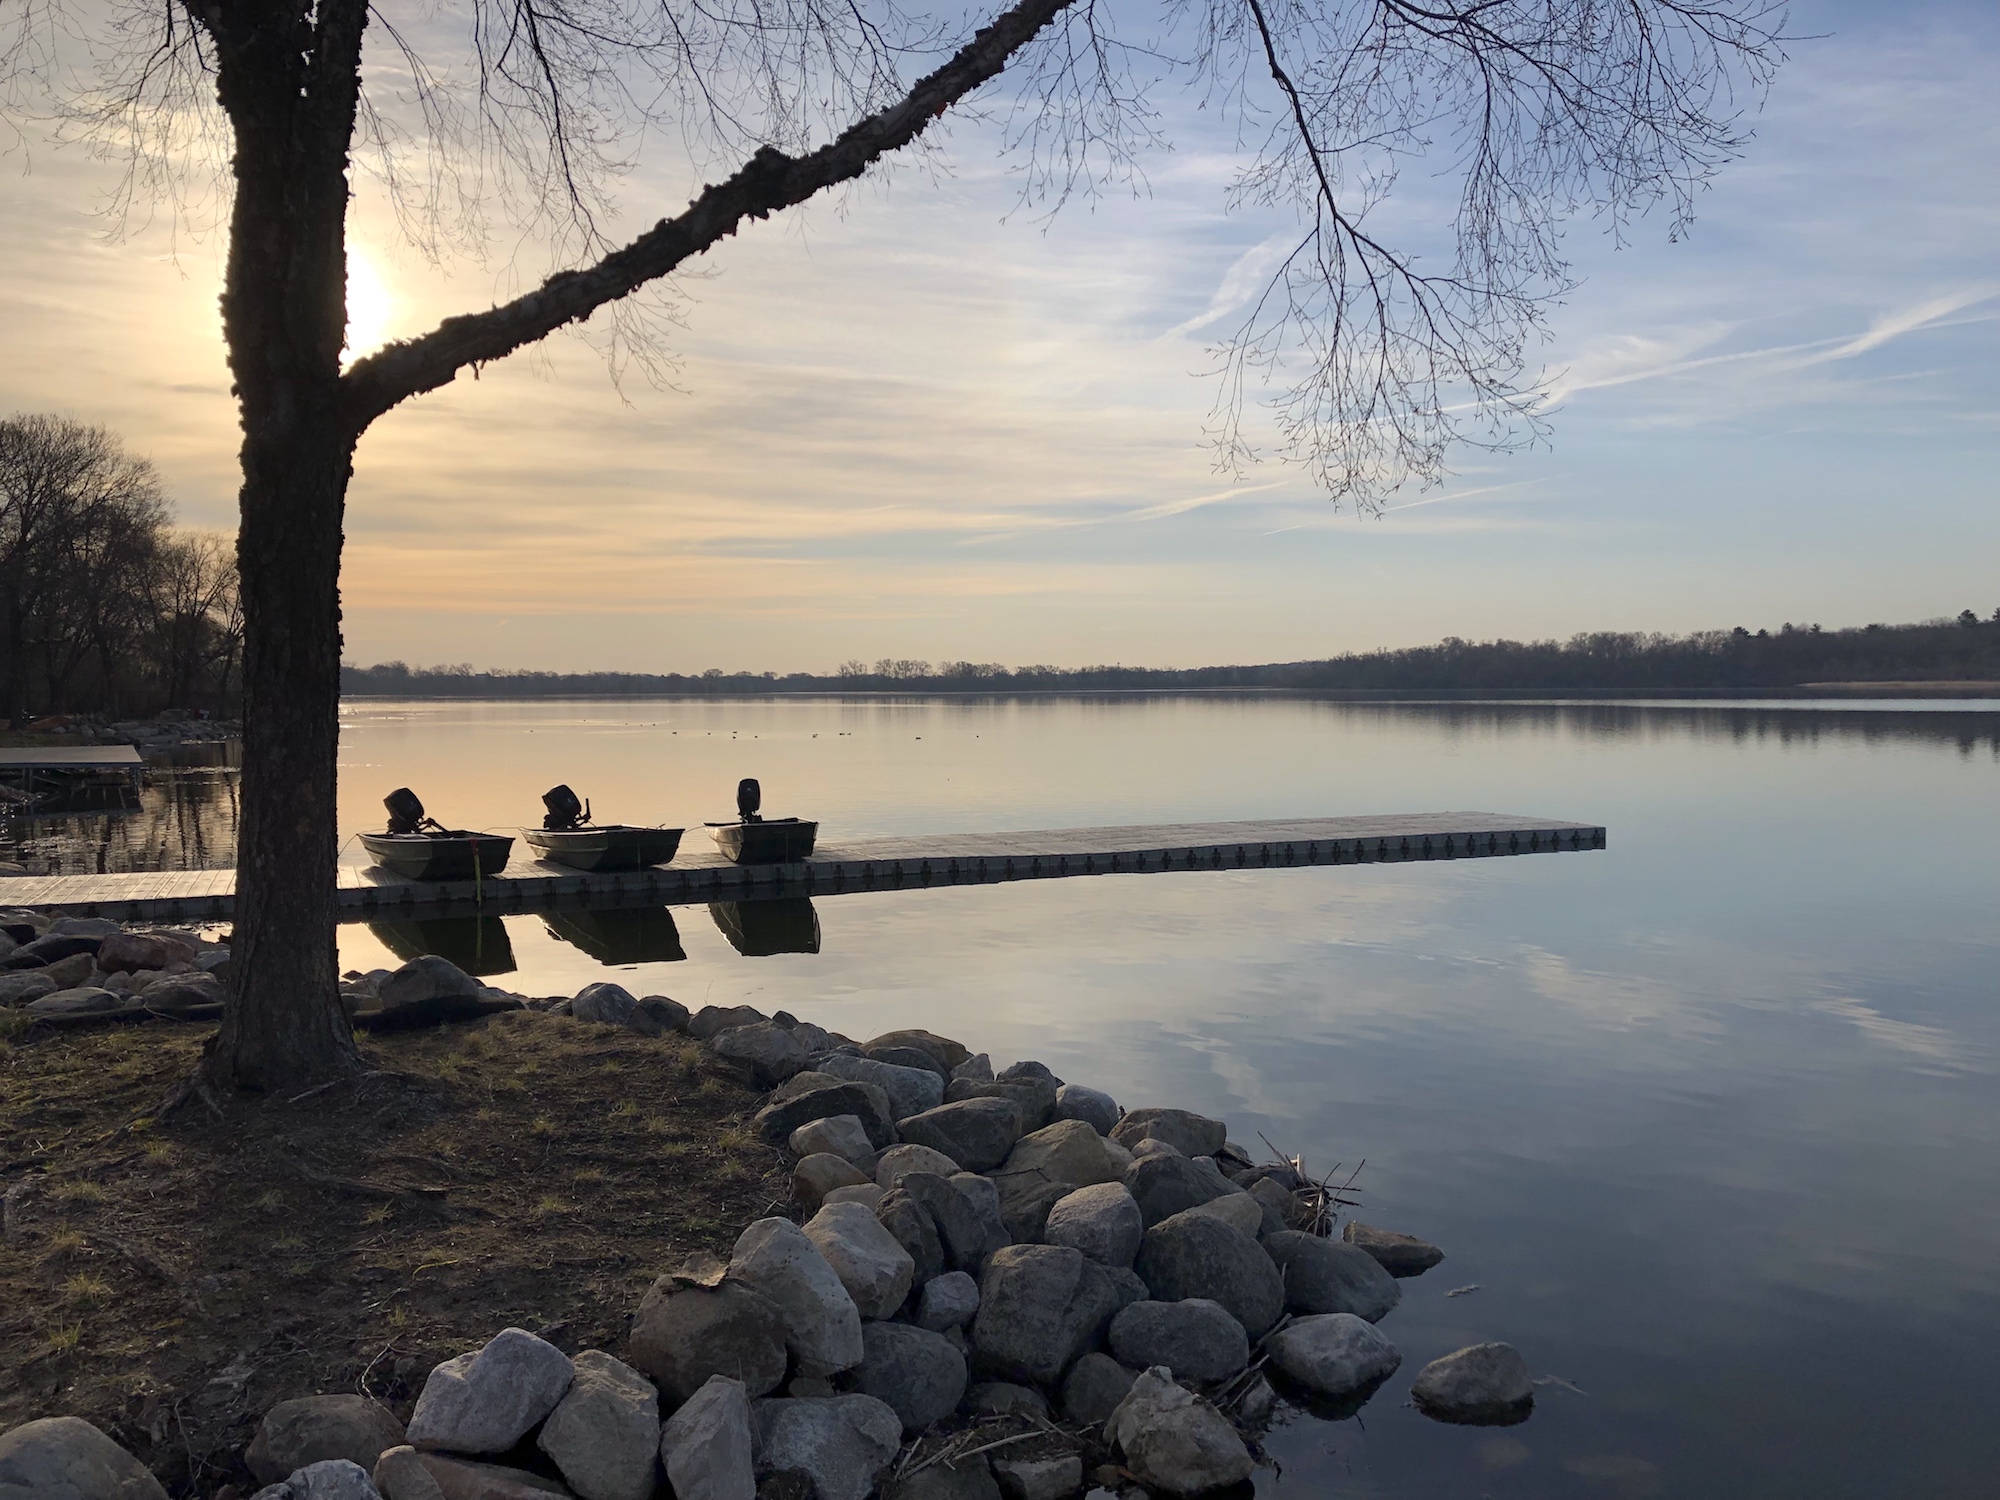 Lake Wingra on April 21, 2019.